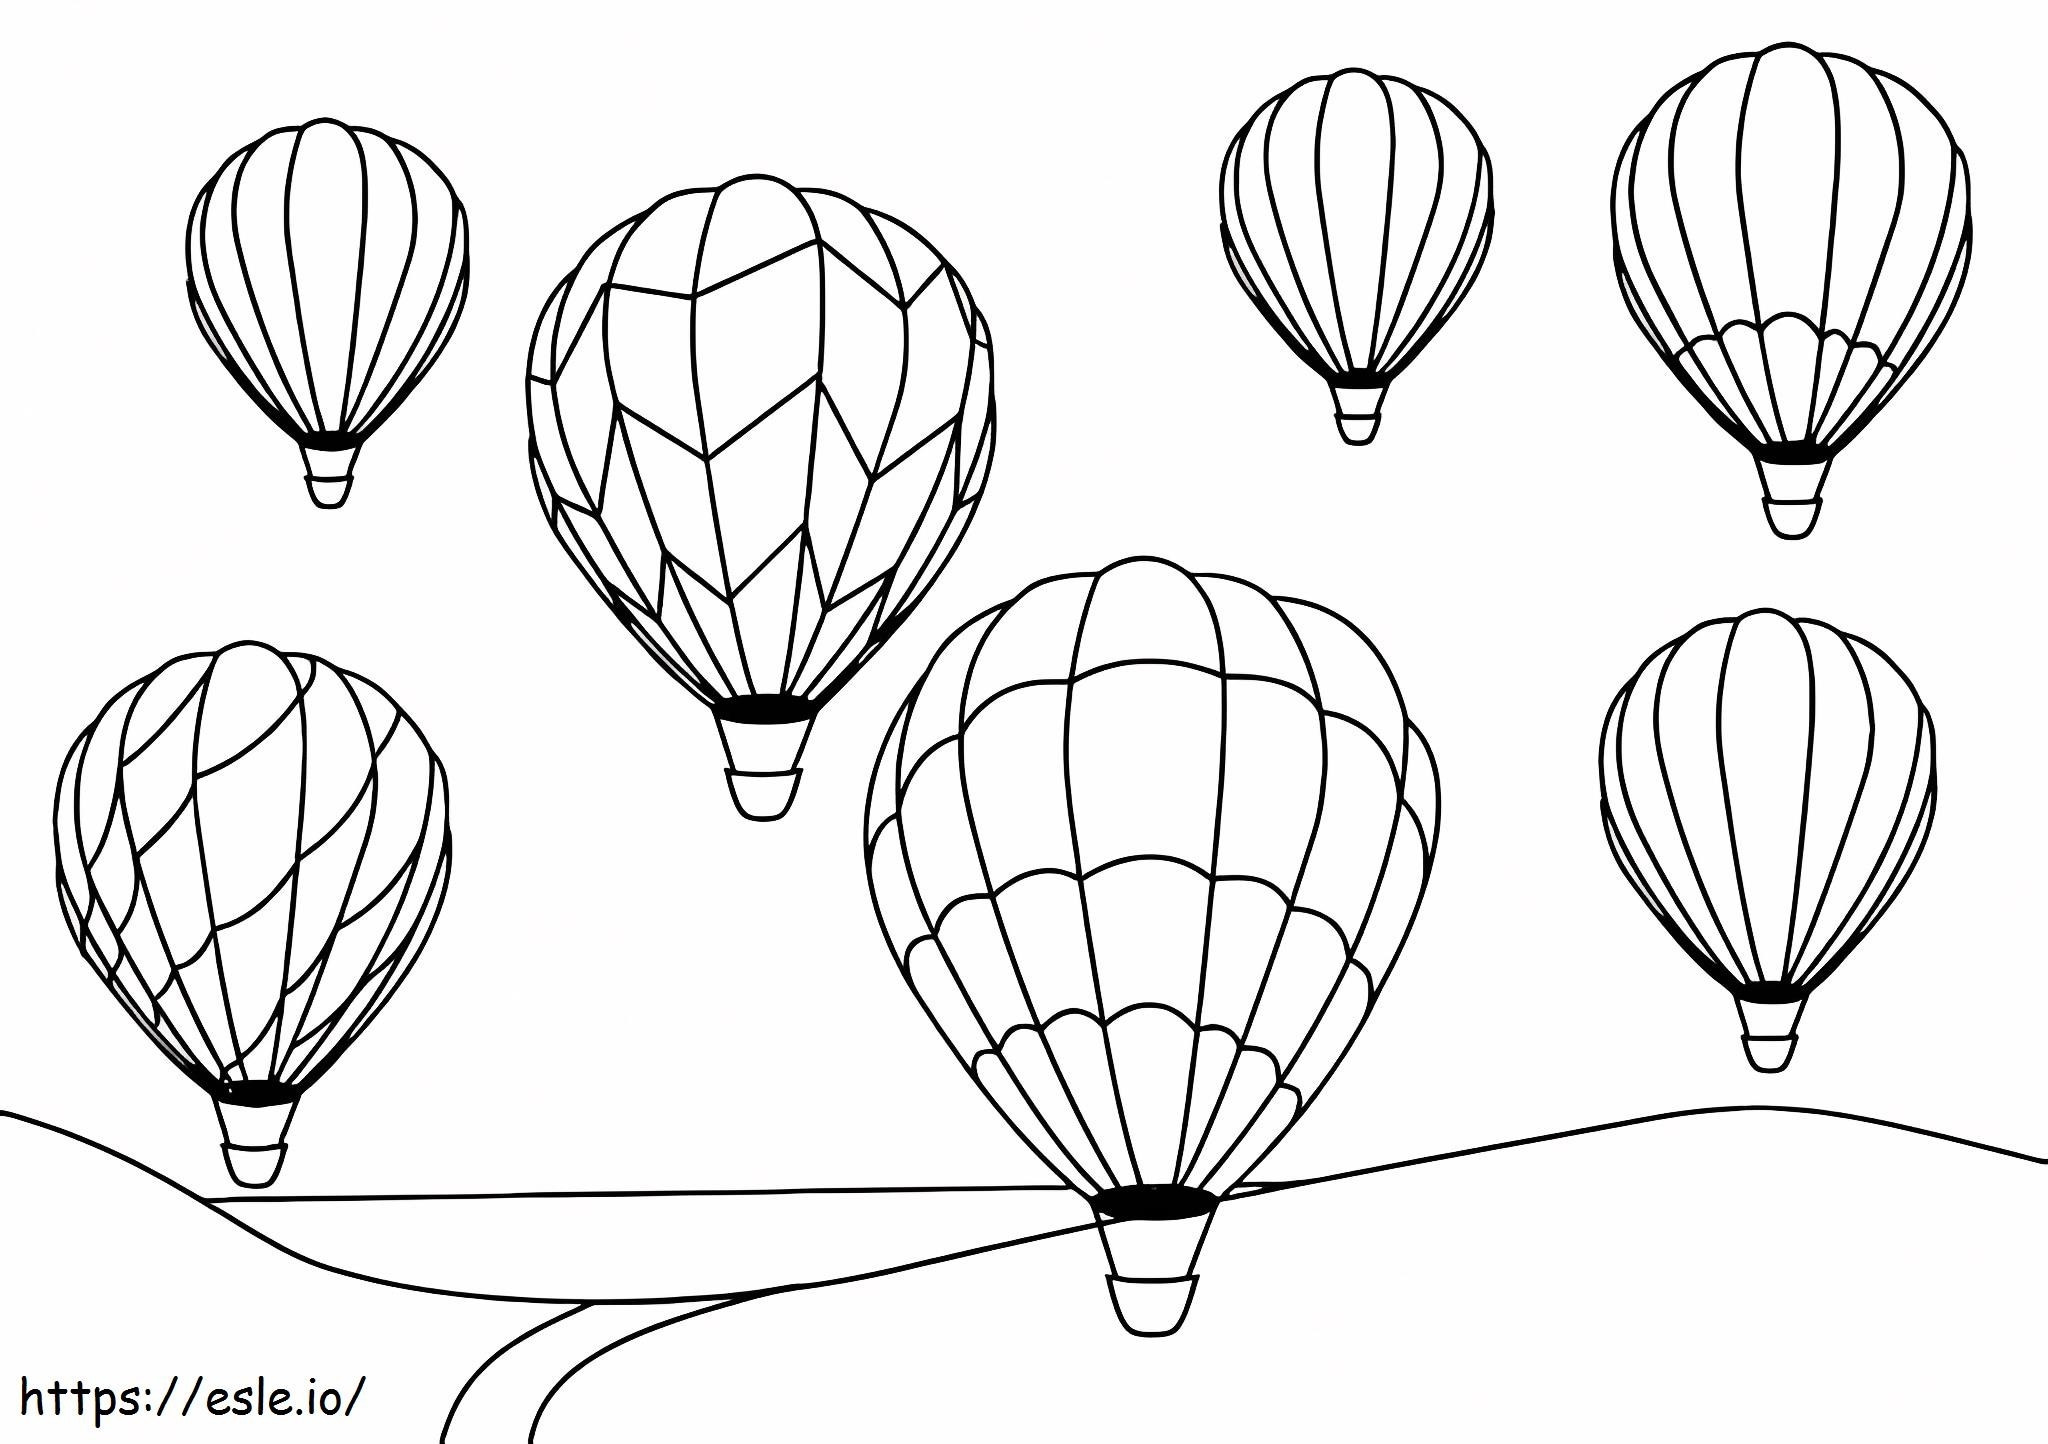 Sieben Heißluftballons ausmalbilder